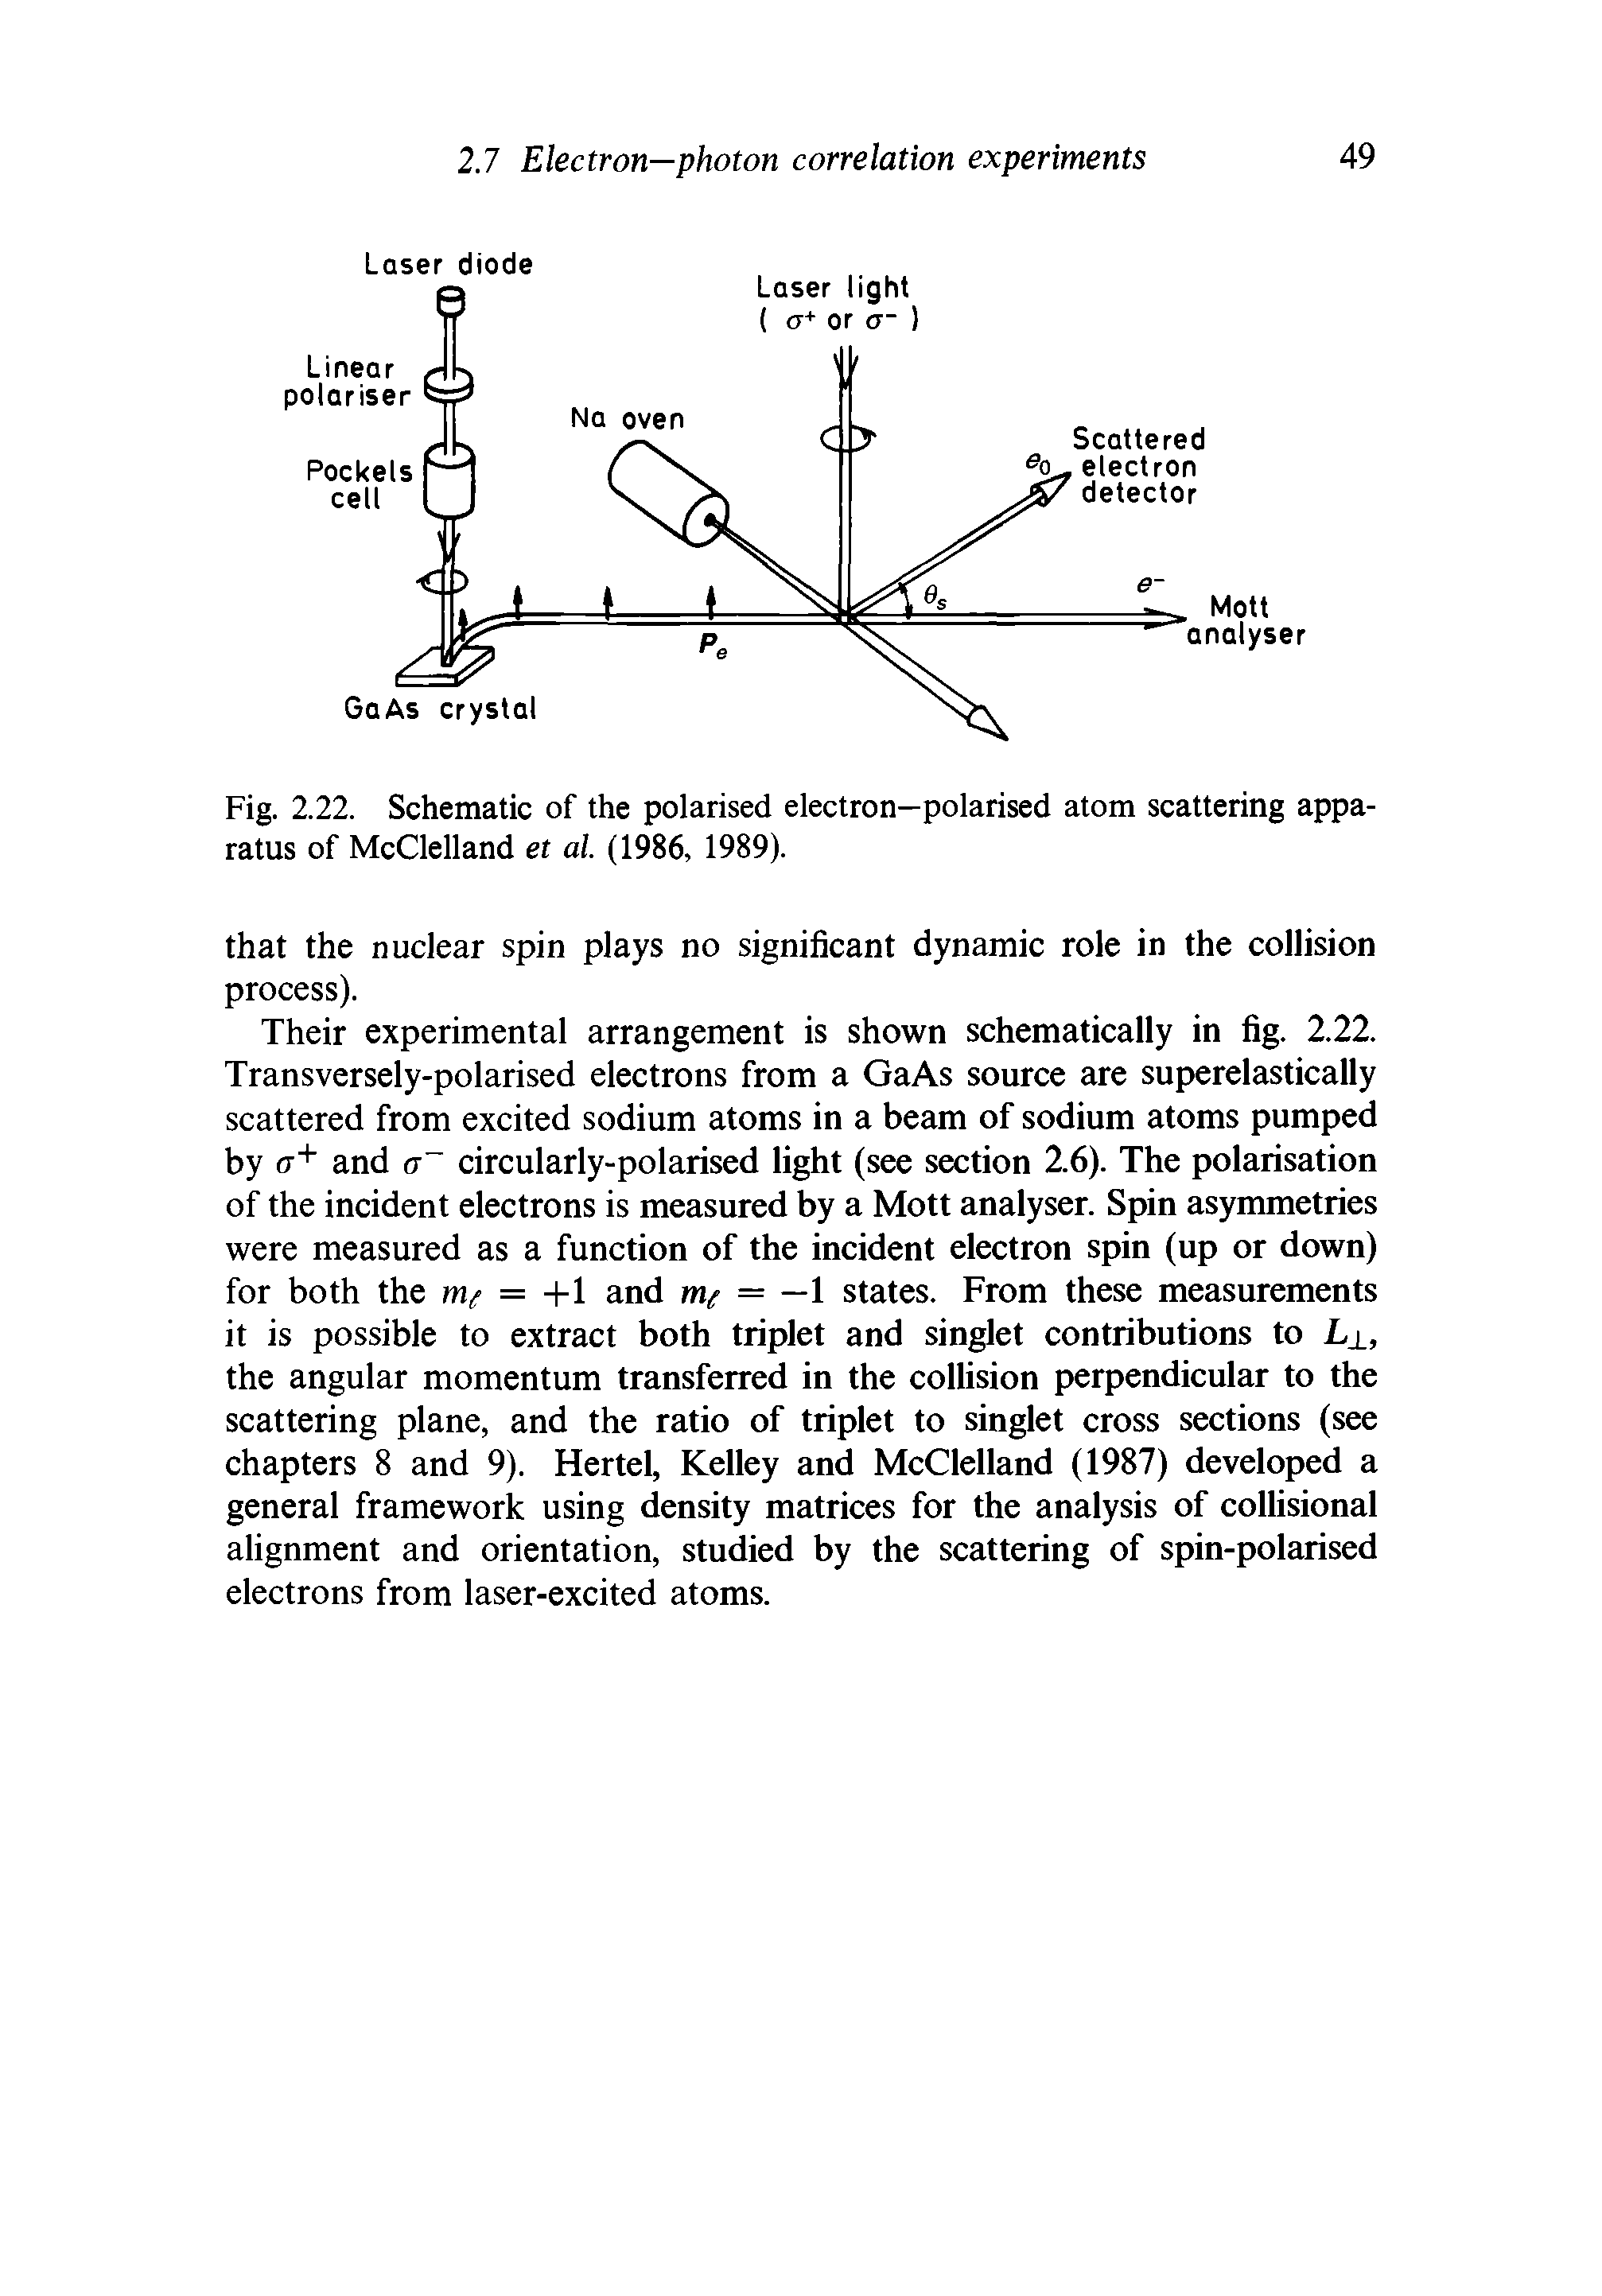 Fig. 2.22. Schematic of the polarised electron—polarised atom scattering apparatus of McClelland et al. (1986, 1989).